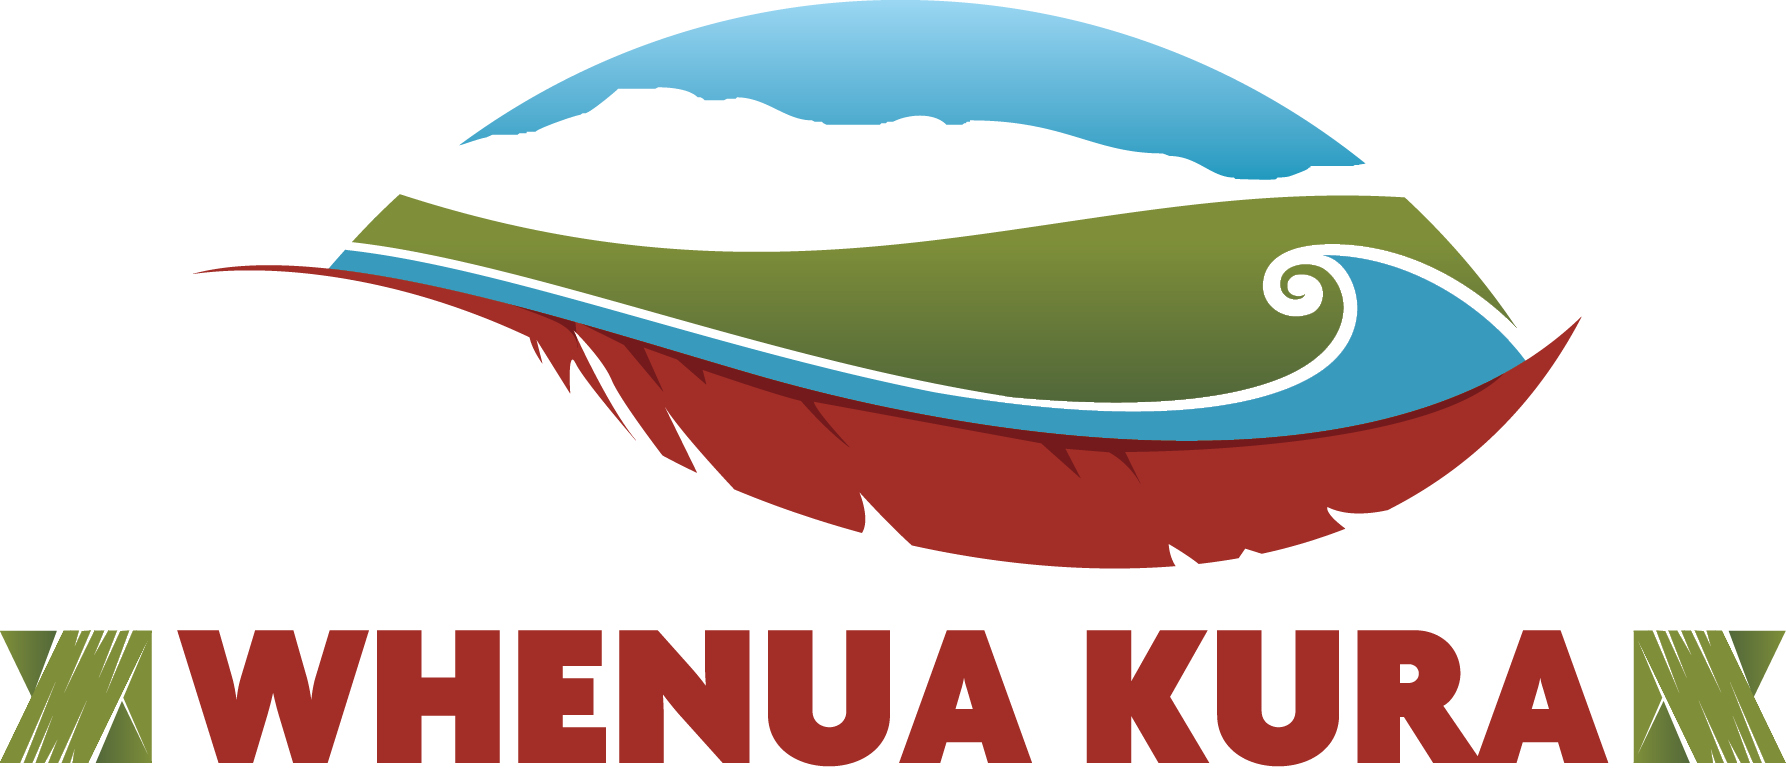 Whenua Kura Logo